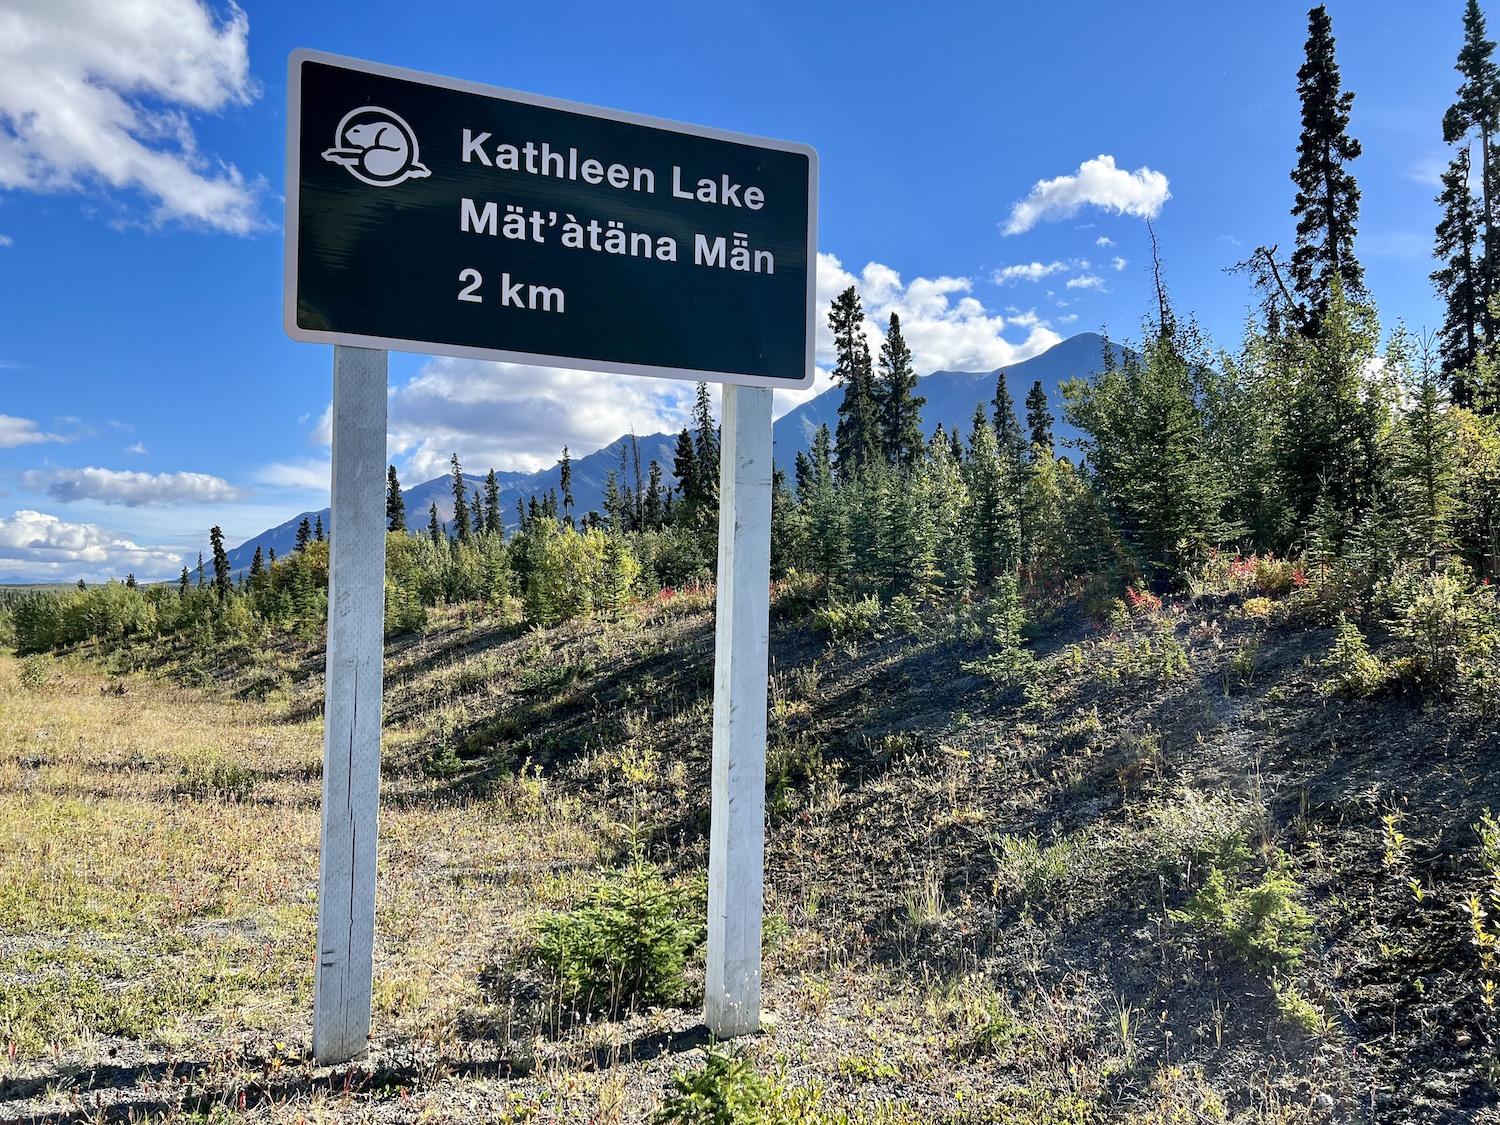 The sign for Mät’àtäna Män (Kathleen Lake) incorporates the Southern Tutchone language with English.